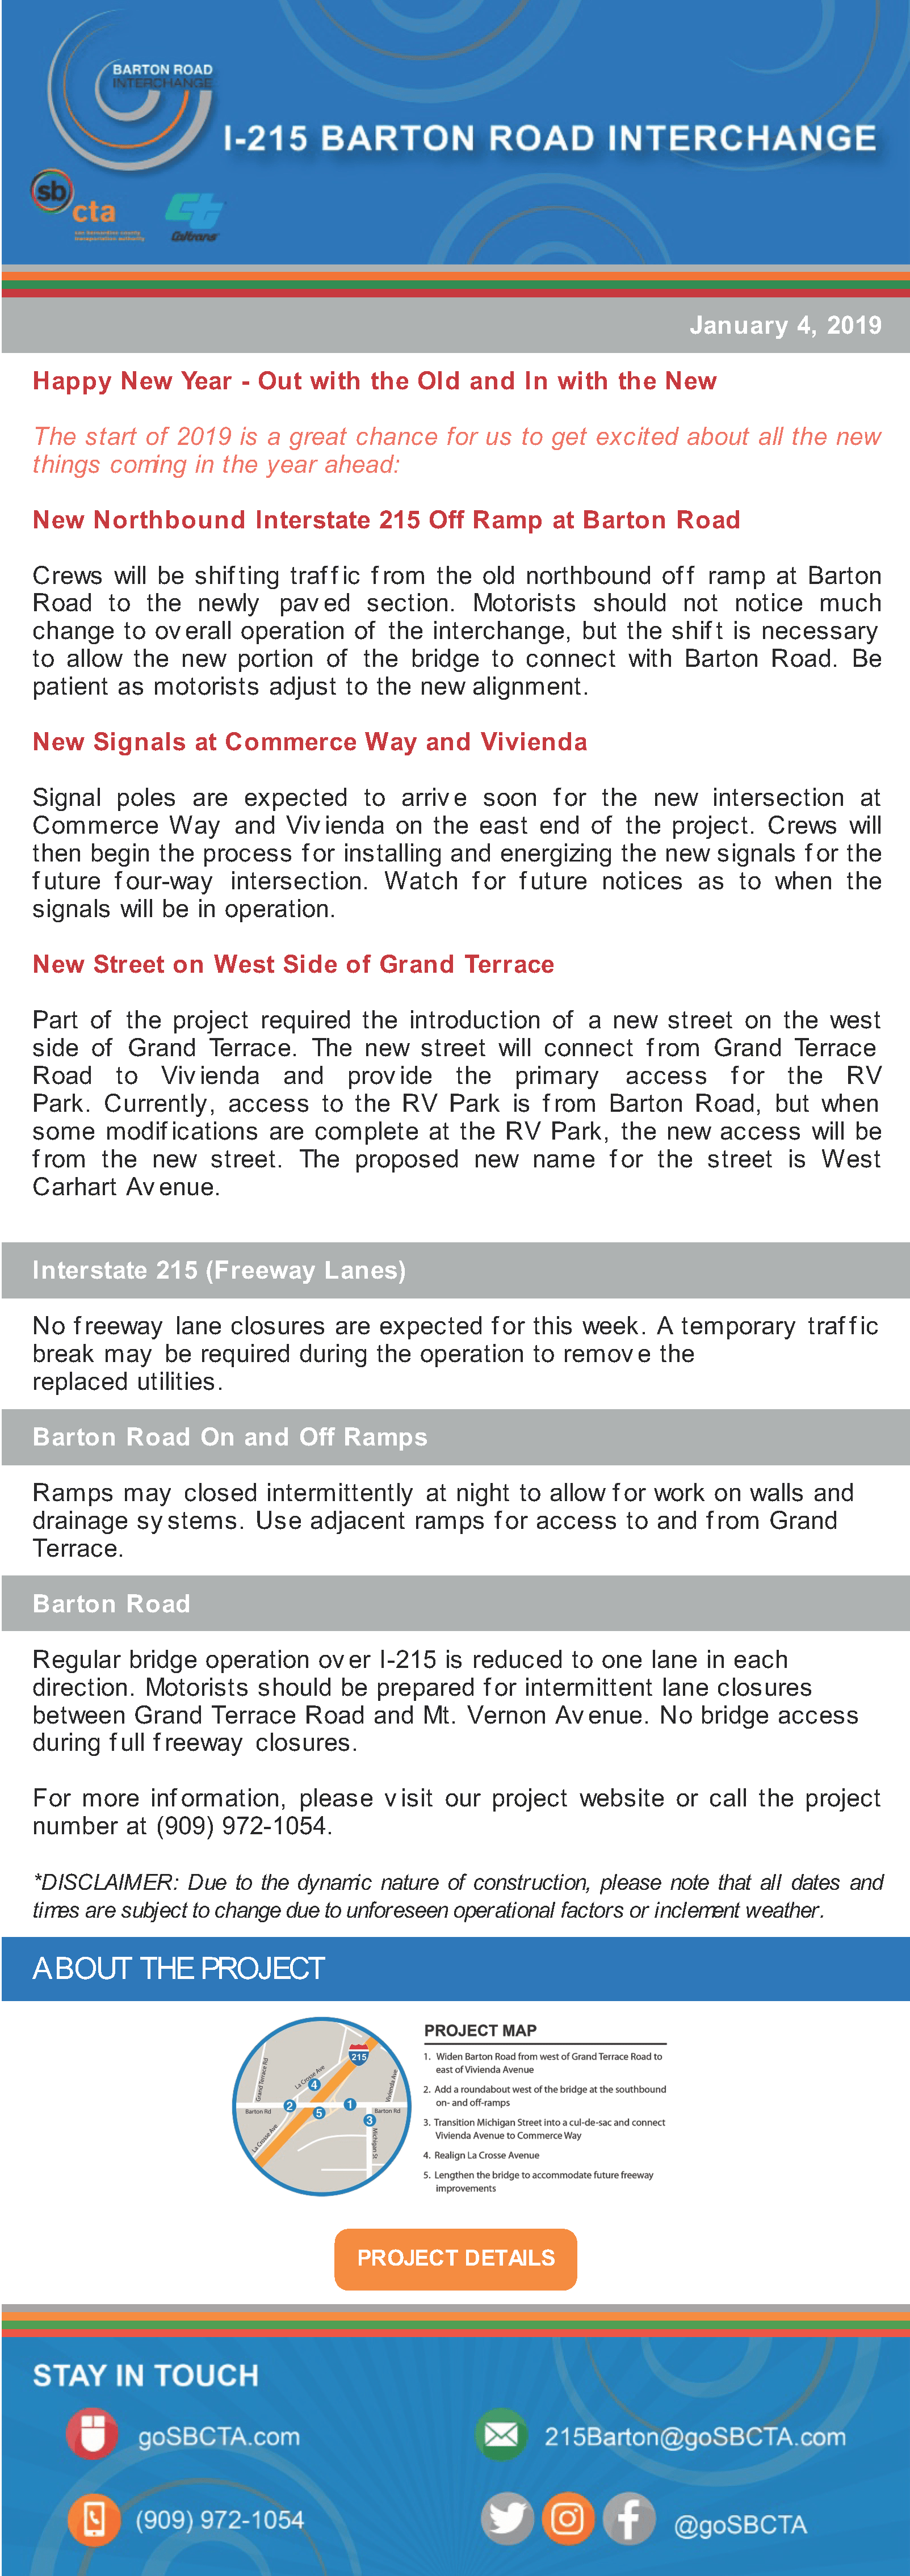 barton road construction notice - week of january 7